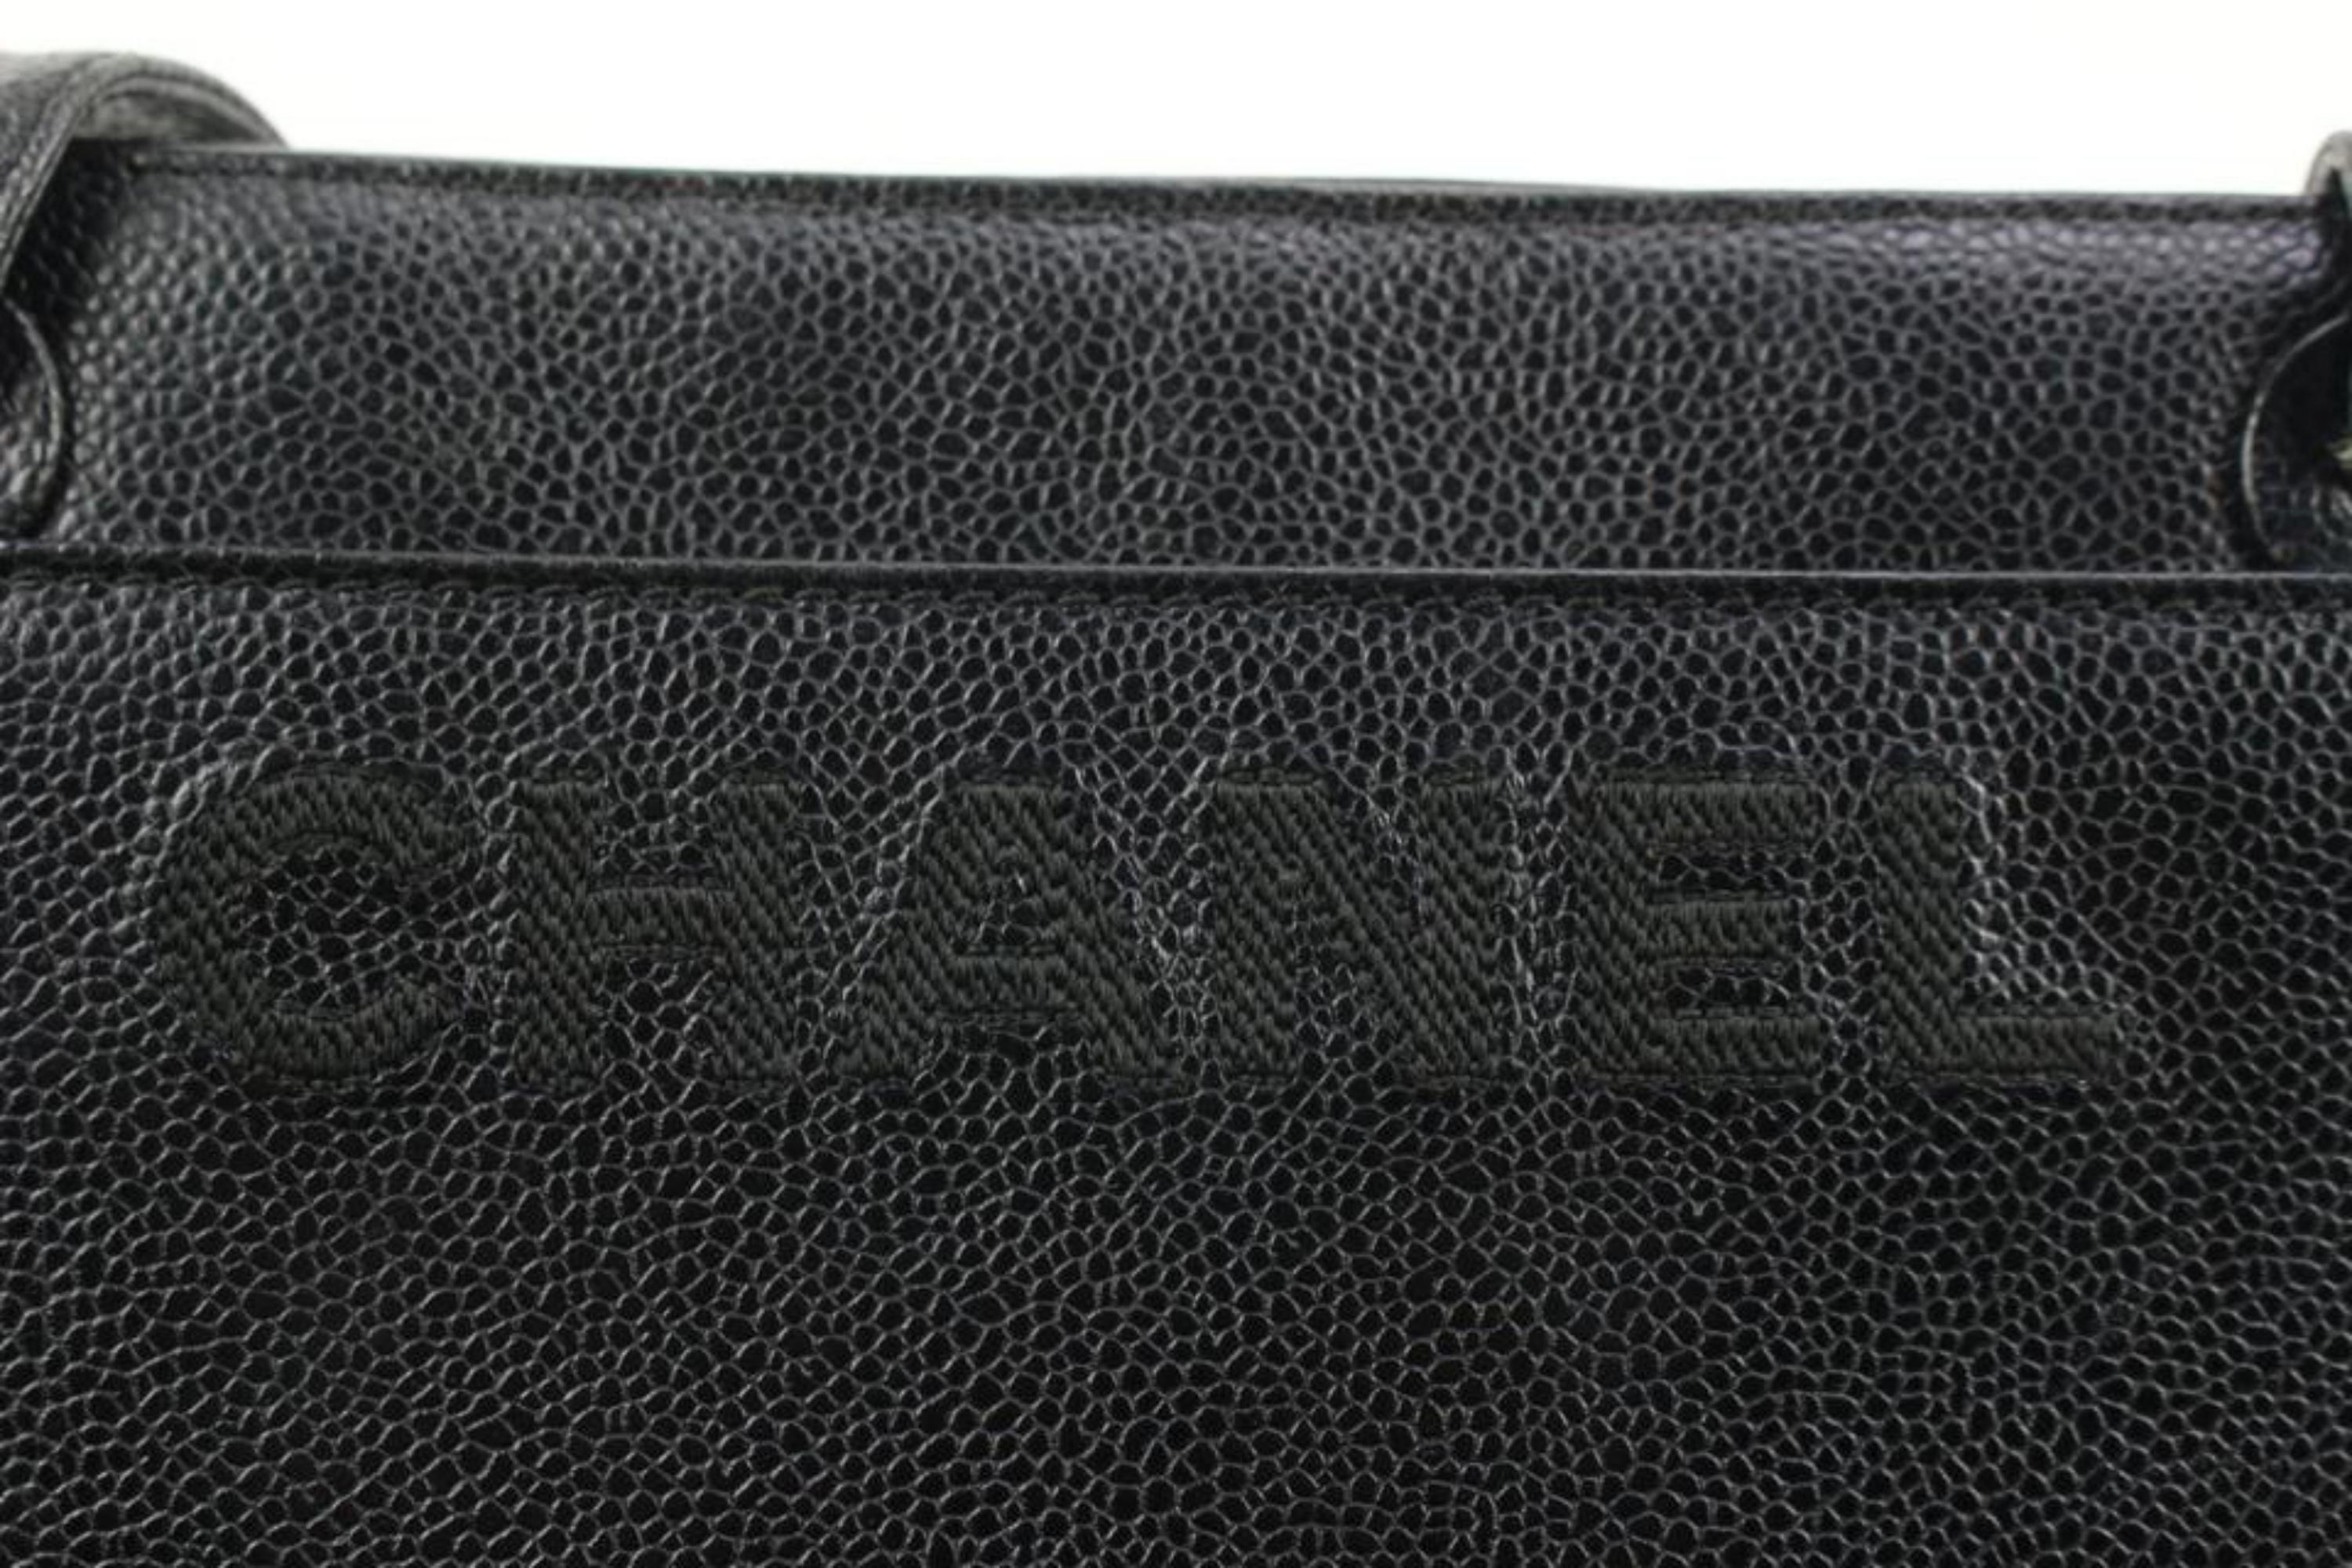 Chanel Black Caviar Logo Shopper Tote Bag 10c131s 4